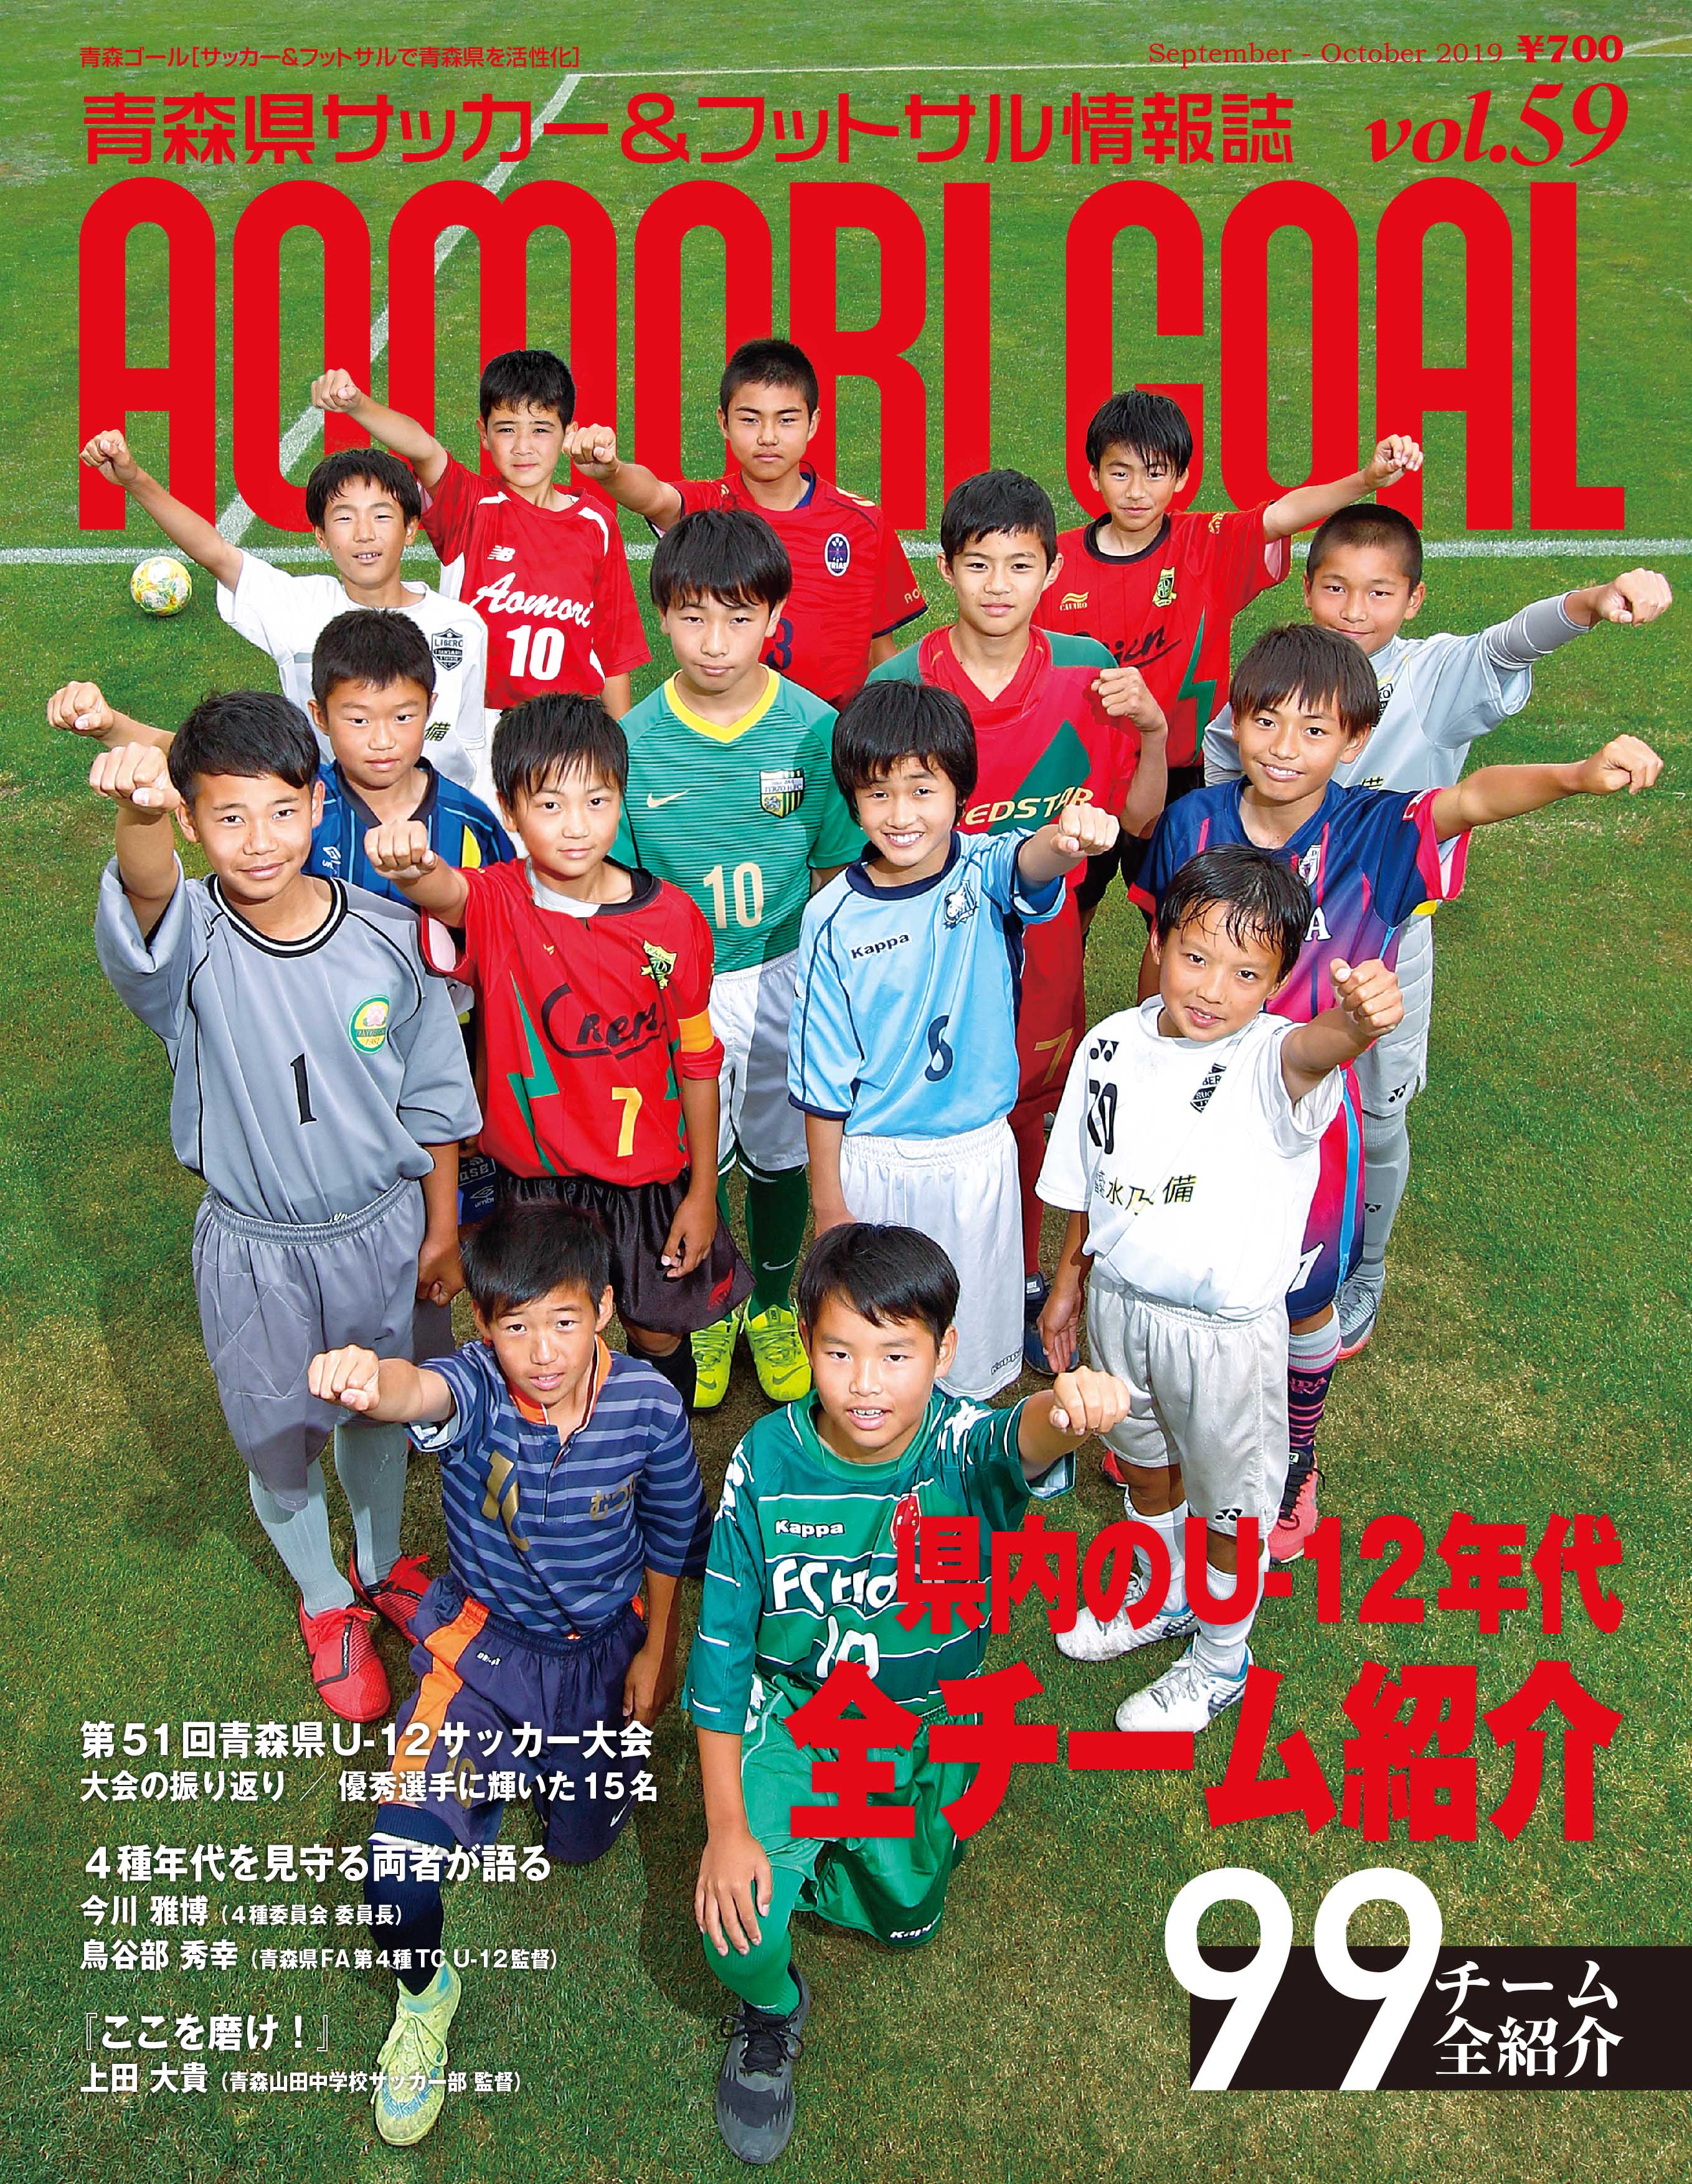 Aomori Goal Vol 59 バックナンバー 青森ゴール Aomori Goal 青森県サッカー フットサルマガジン